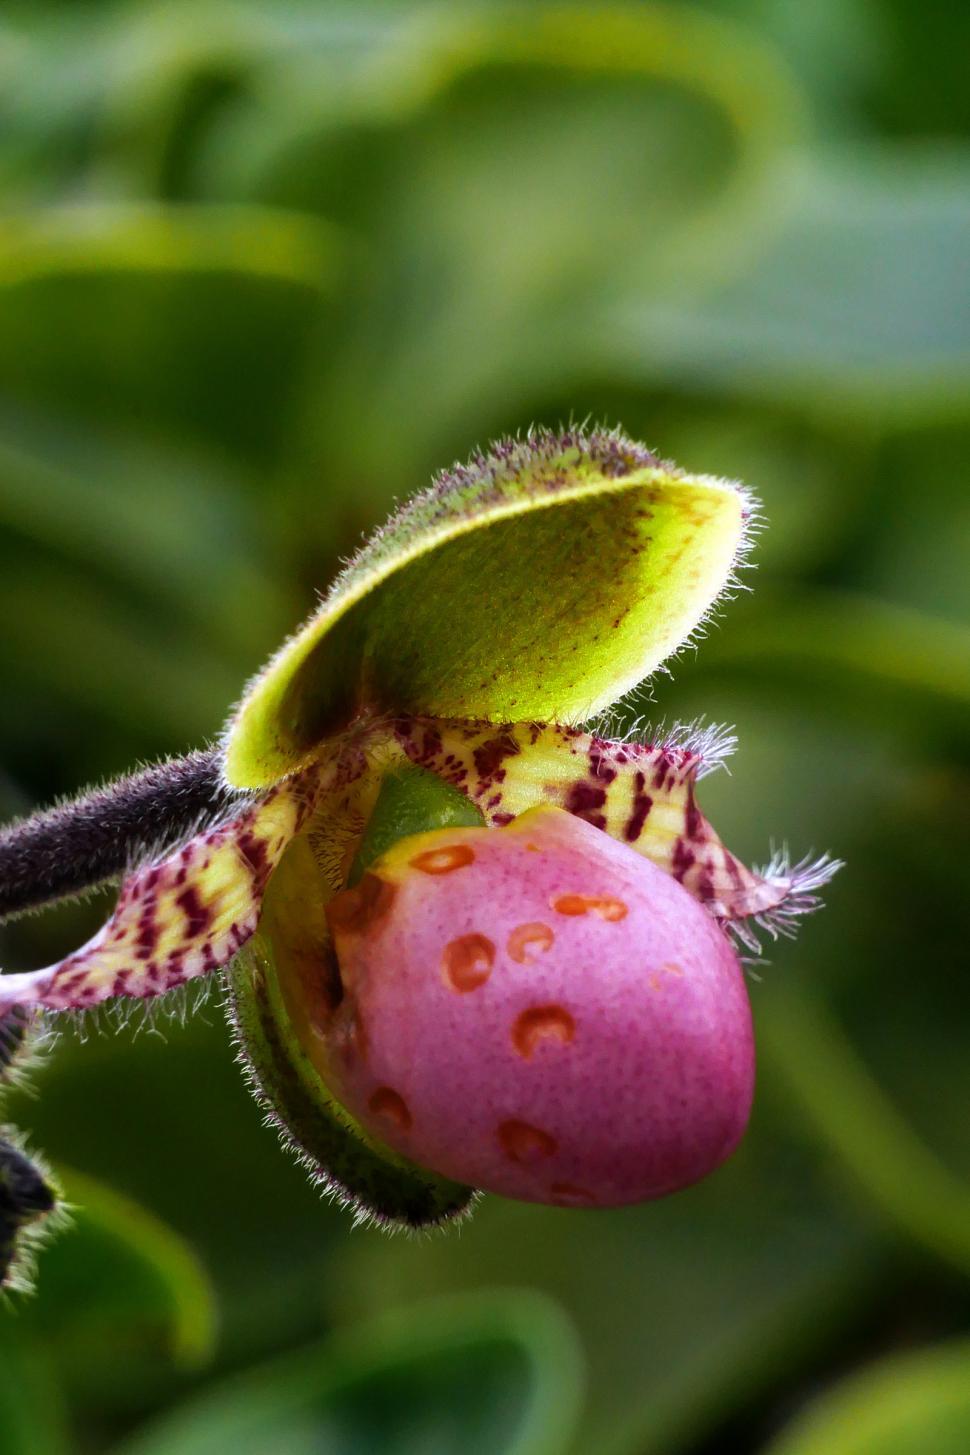 Free Image of Liem s Paphiopedilum Slipper Orchid Flower Closeup 